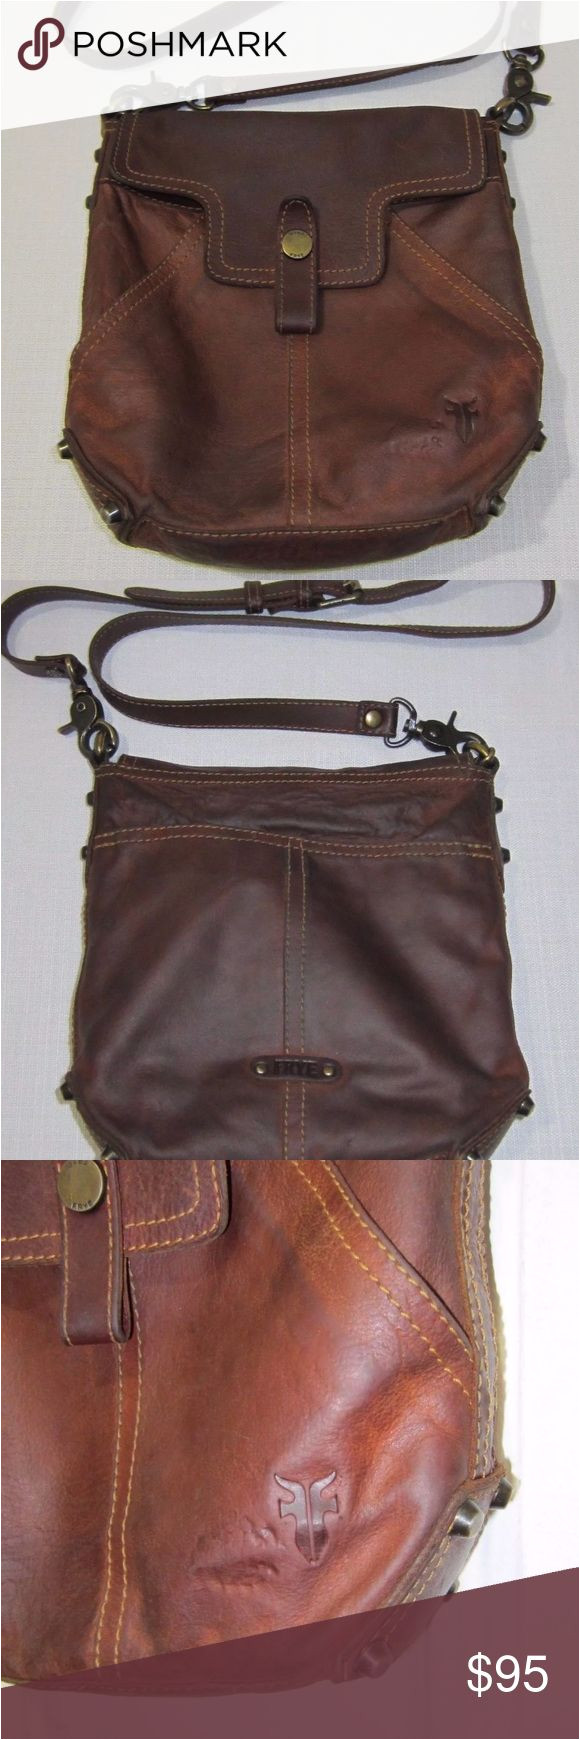 frye crossbody purse